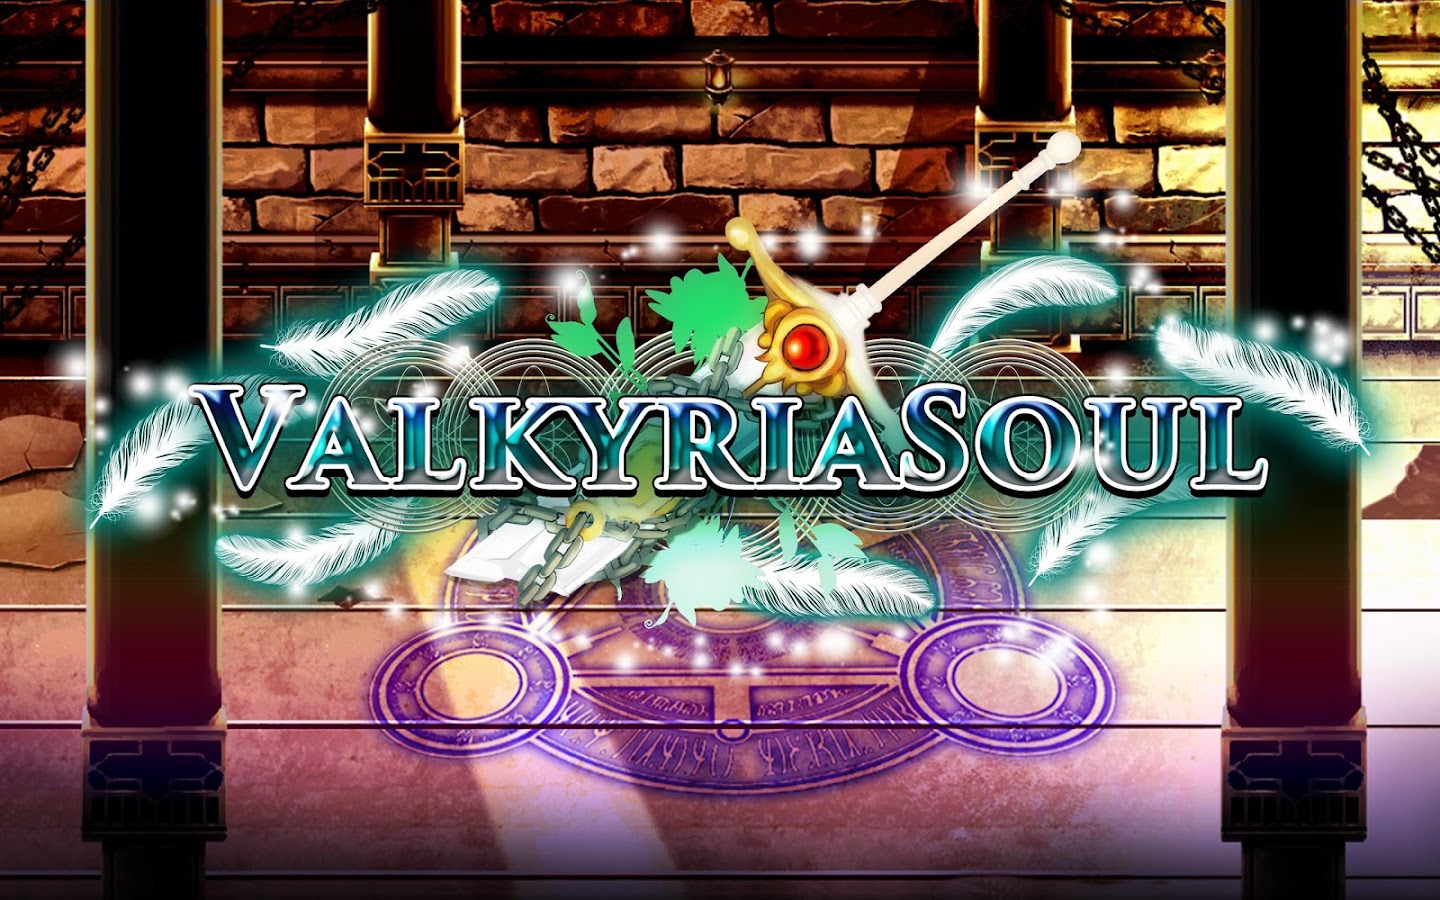    RPG Valkyria Soul- screenshot  